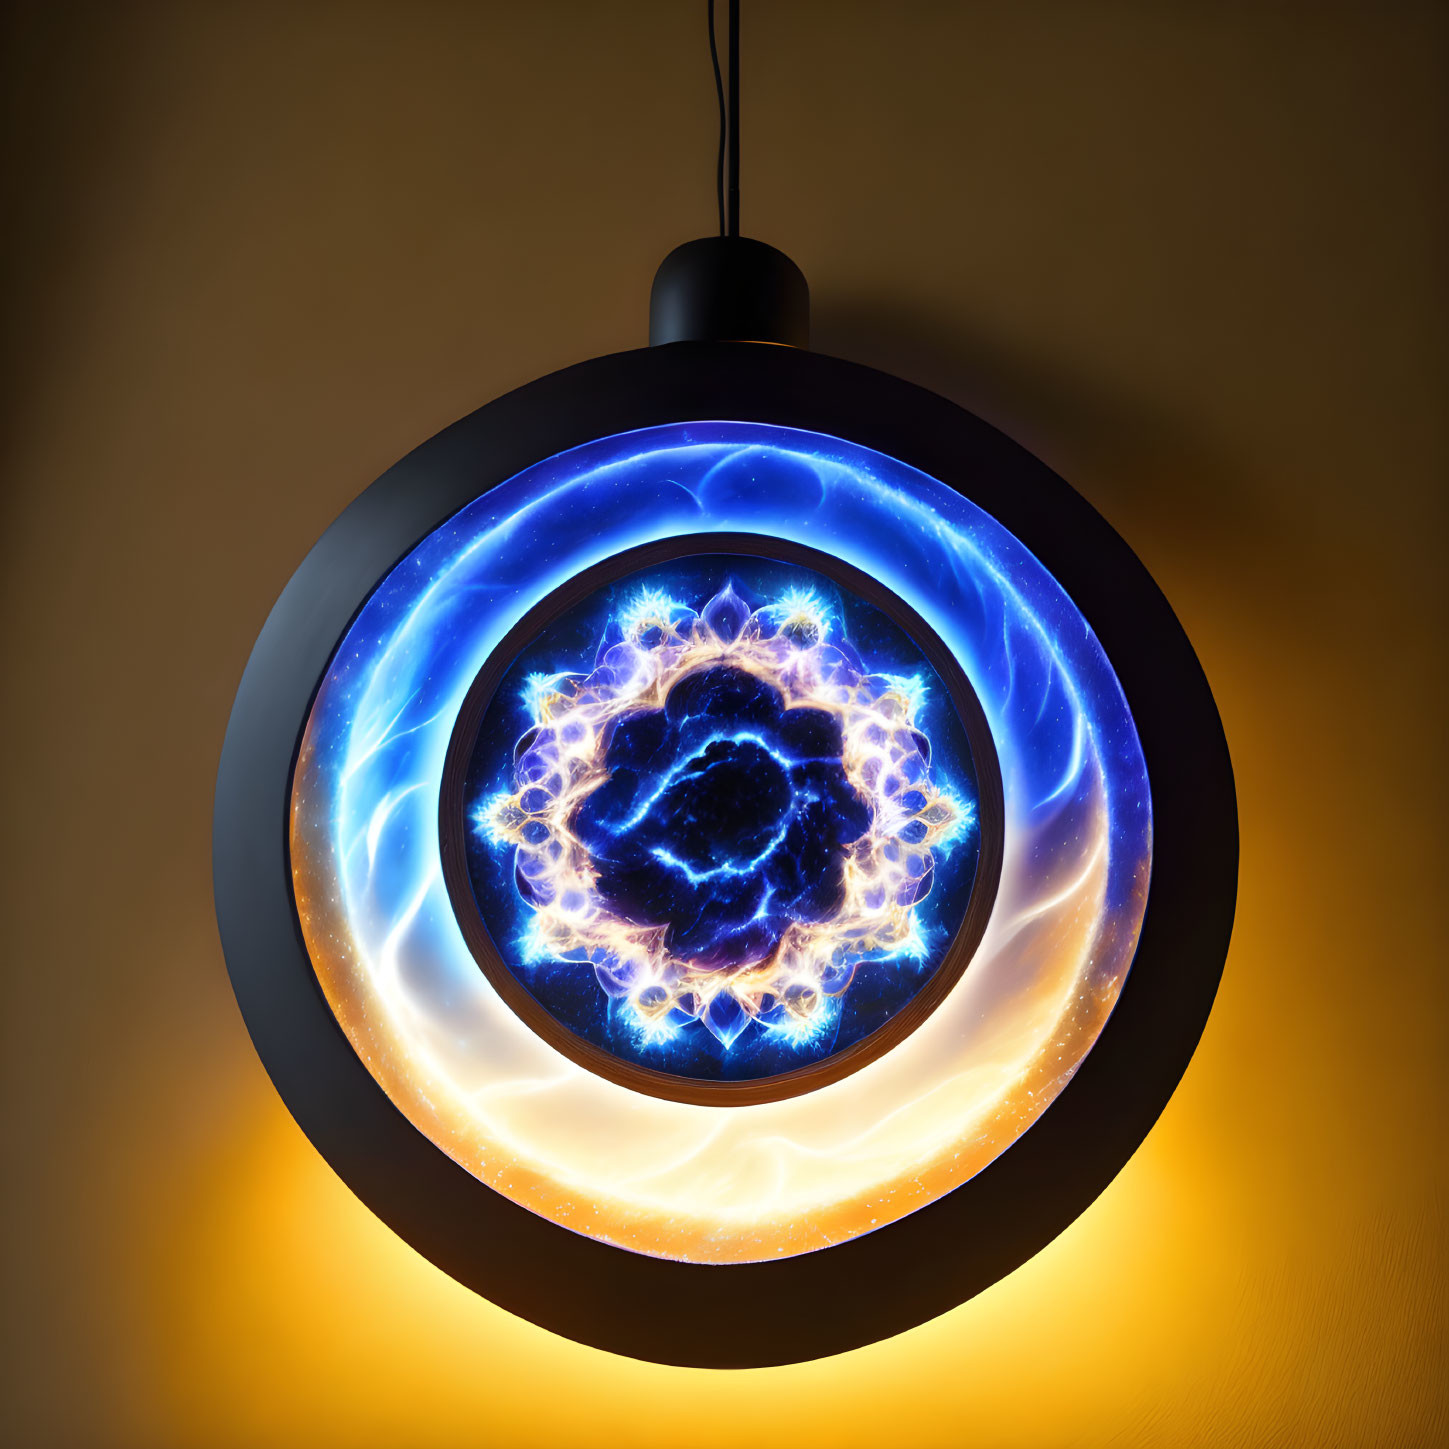 Circular Blue Plasma Ceiling Lamp on Warm Yellow Background